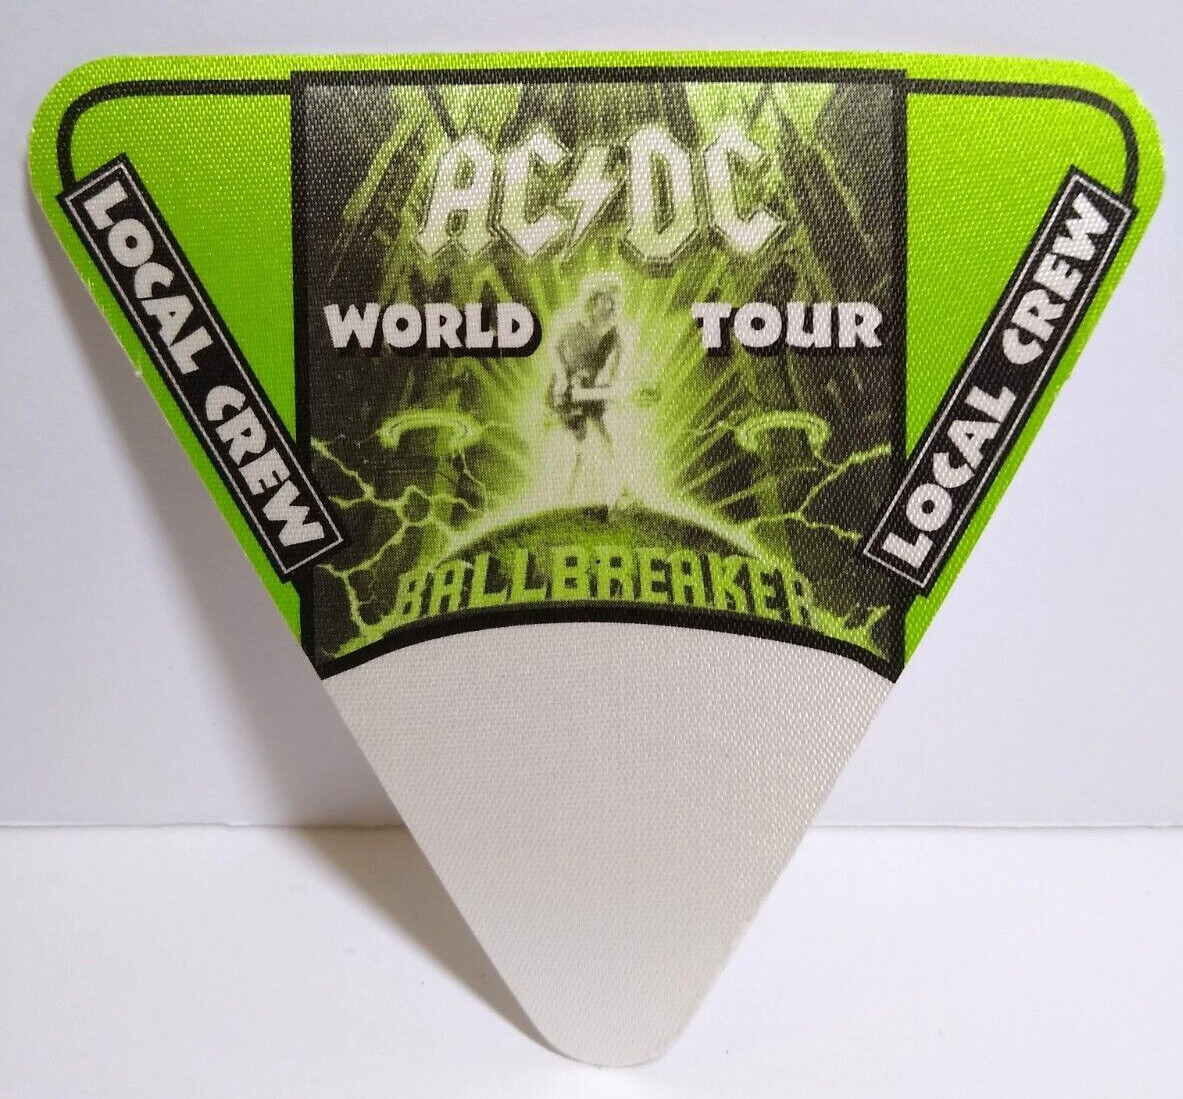 AC/DC Backstage Pass Ballbreaker World Tour Original 1996 Original Hard Rock